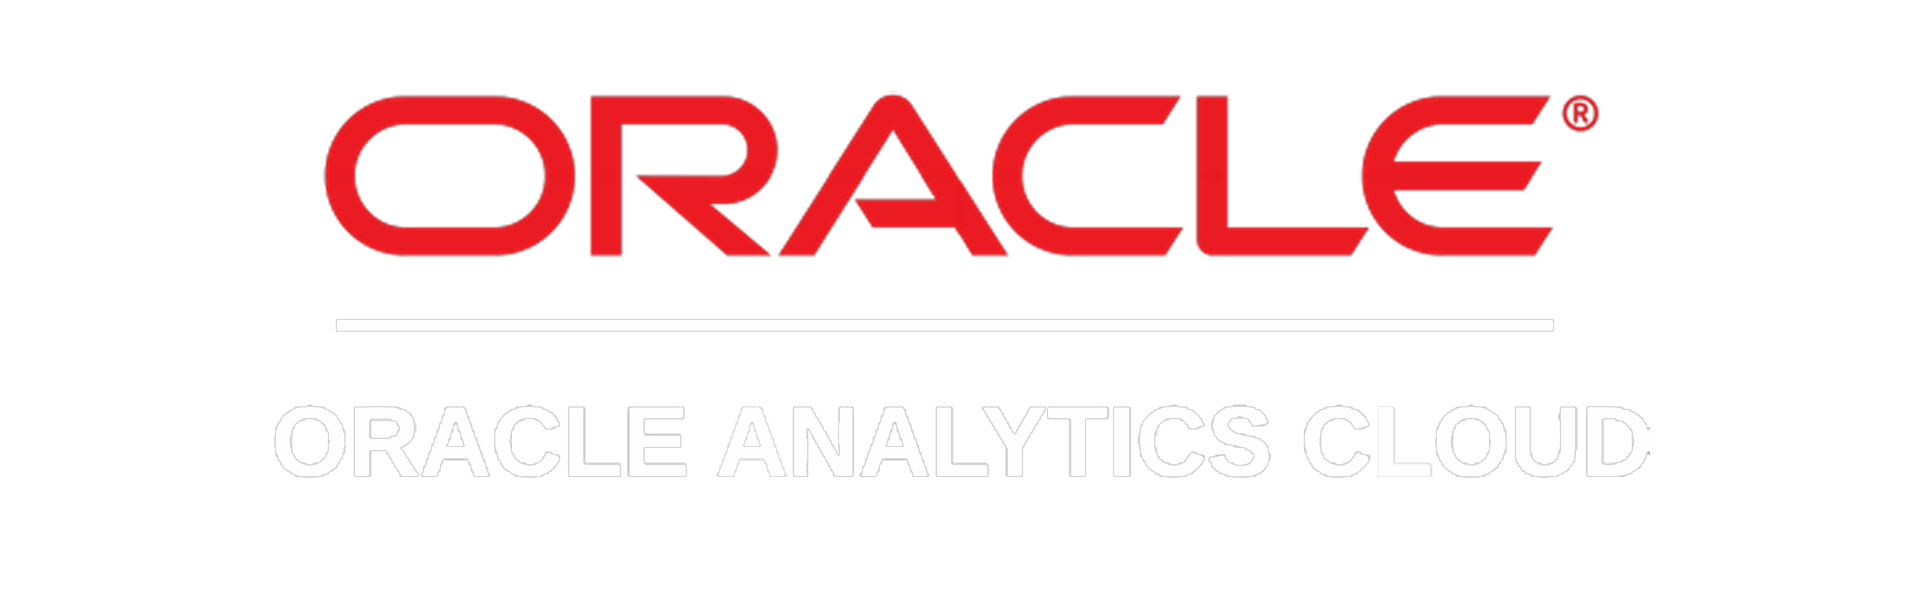 Oracle Analytics Cloud logo